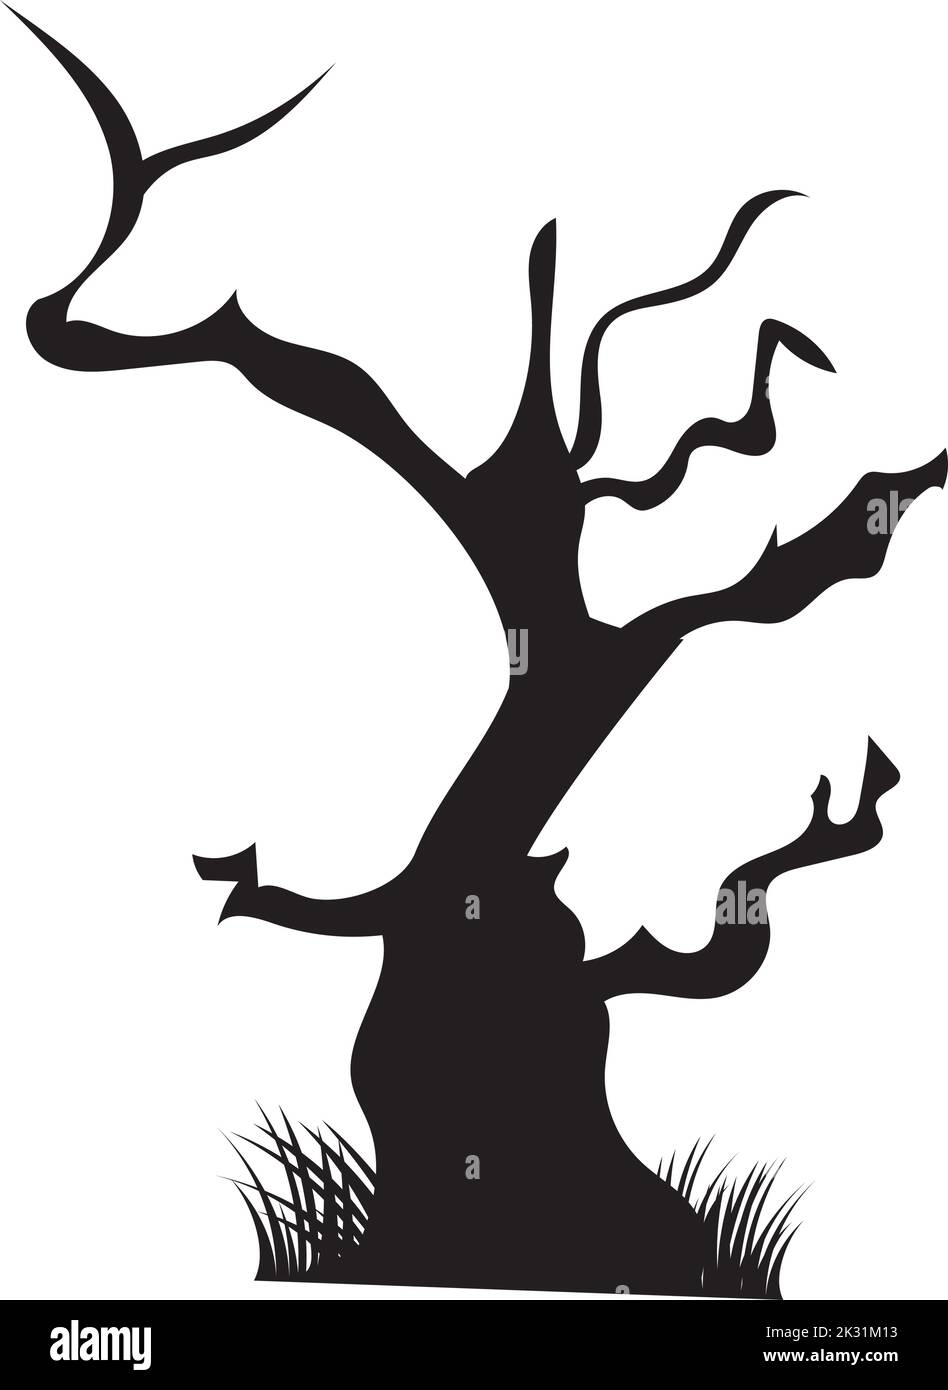 Trockene schwarze Silhouette von Bäumen Stock Vektor